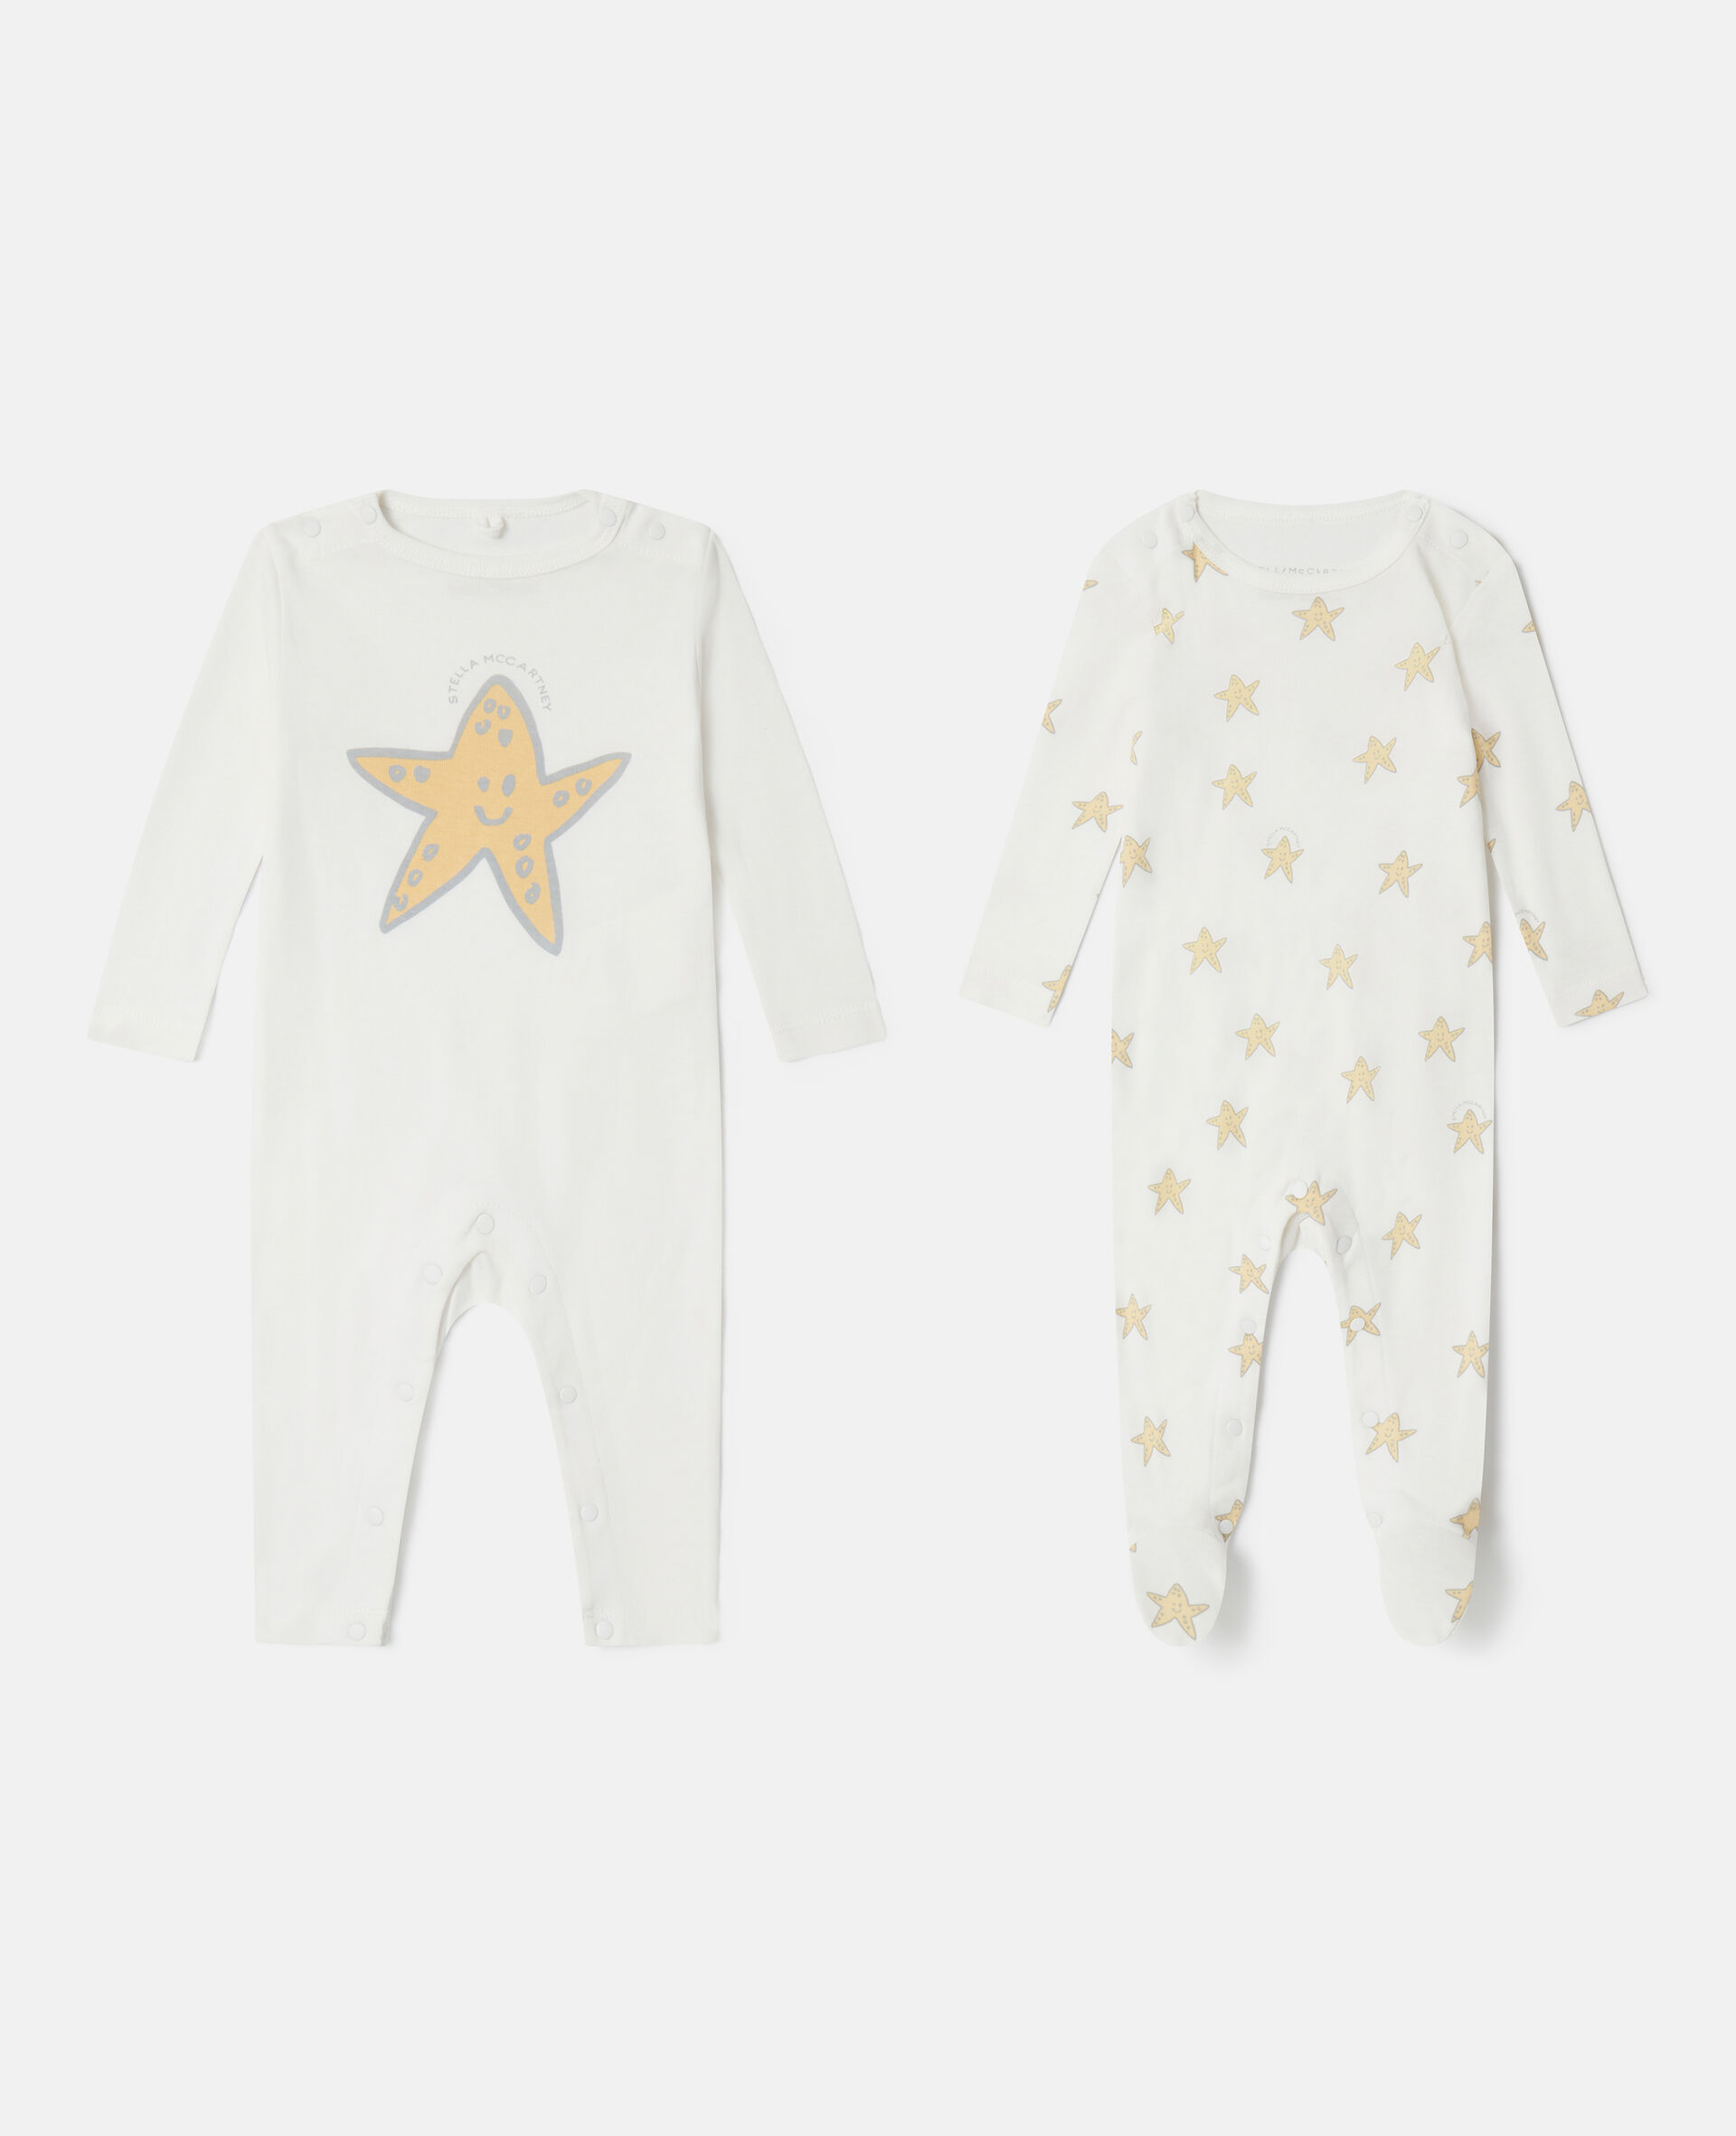 Smiling Stella Star Print Sleepsuit Set-Fantaisie-medium